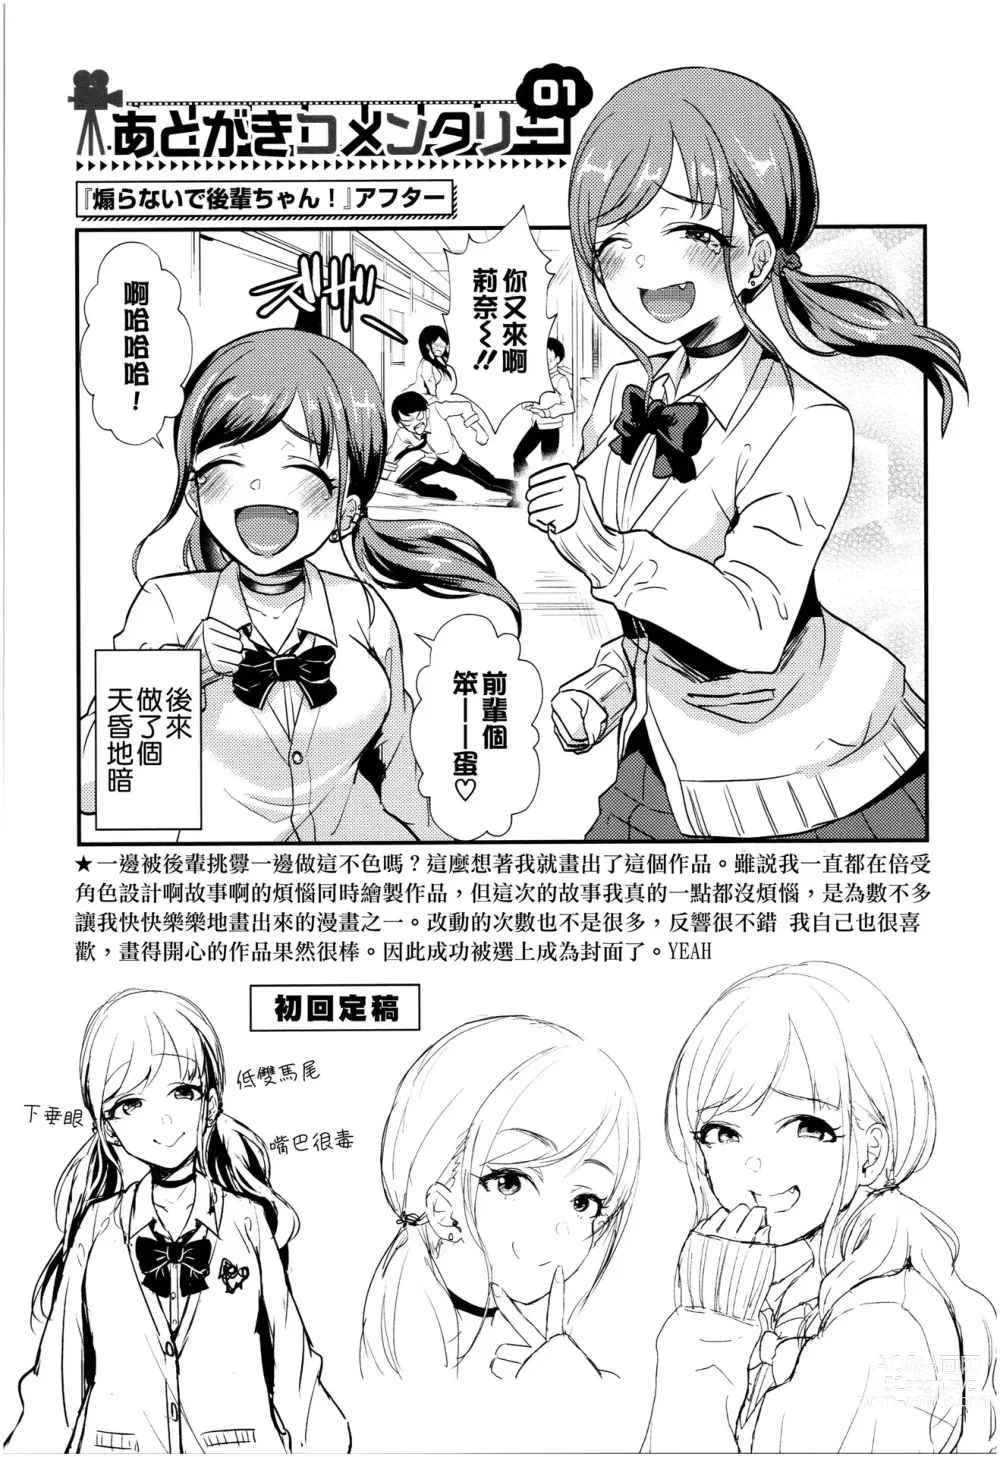 Page 186 of manga Otome Initiative - Girls Initiative (uncensored)